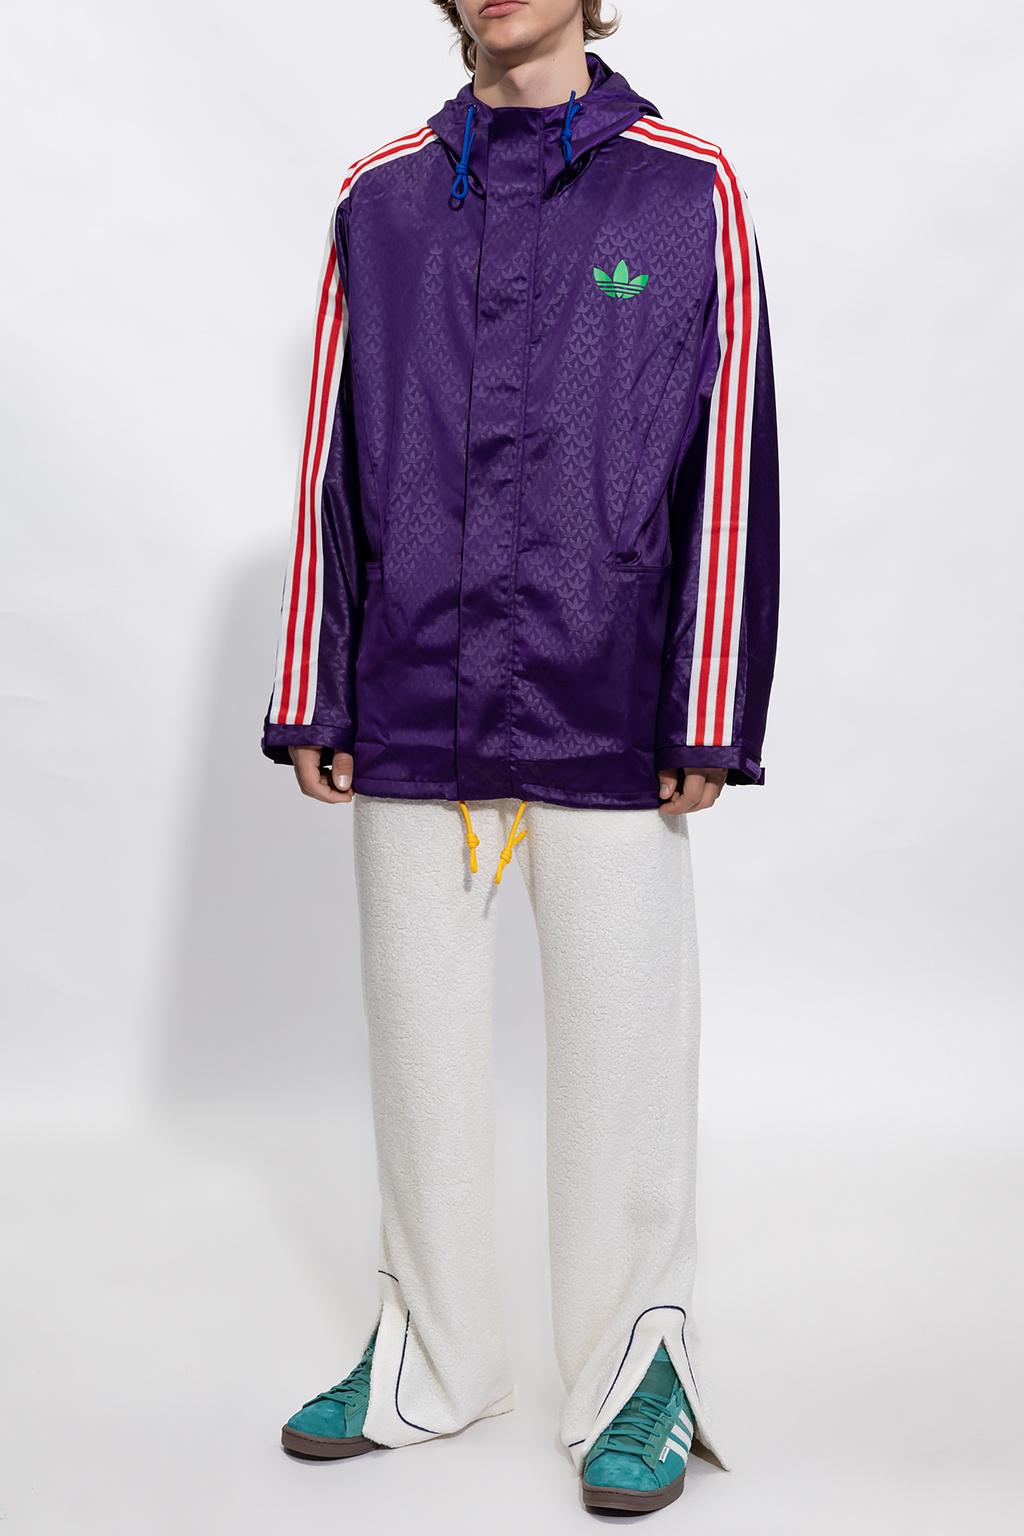 adidas Originals Jacket With Logo in Purple for Men | Lyst